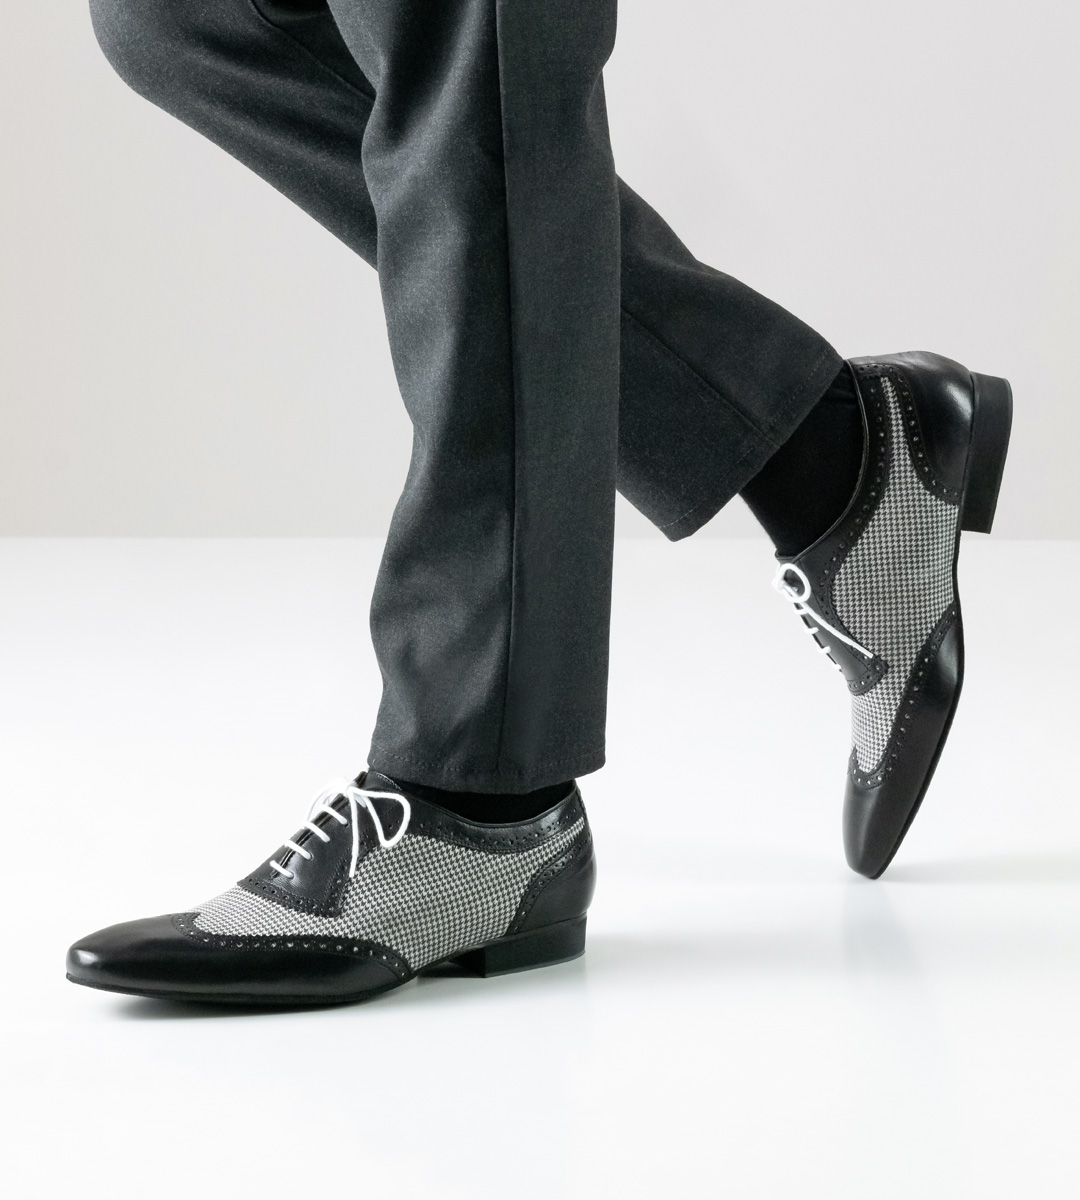 Men's dance shoe in black and white combination by Nueva Epoca